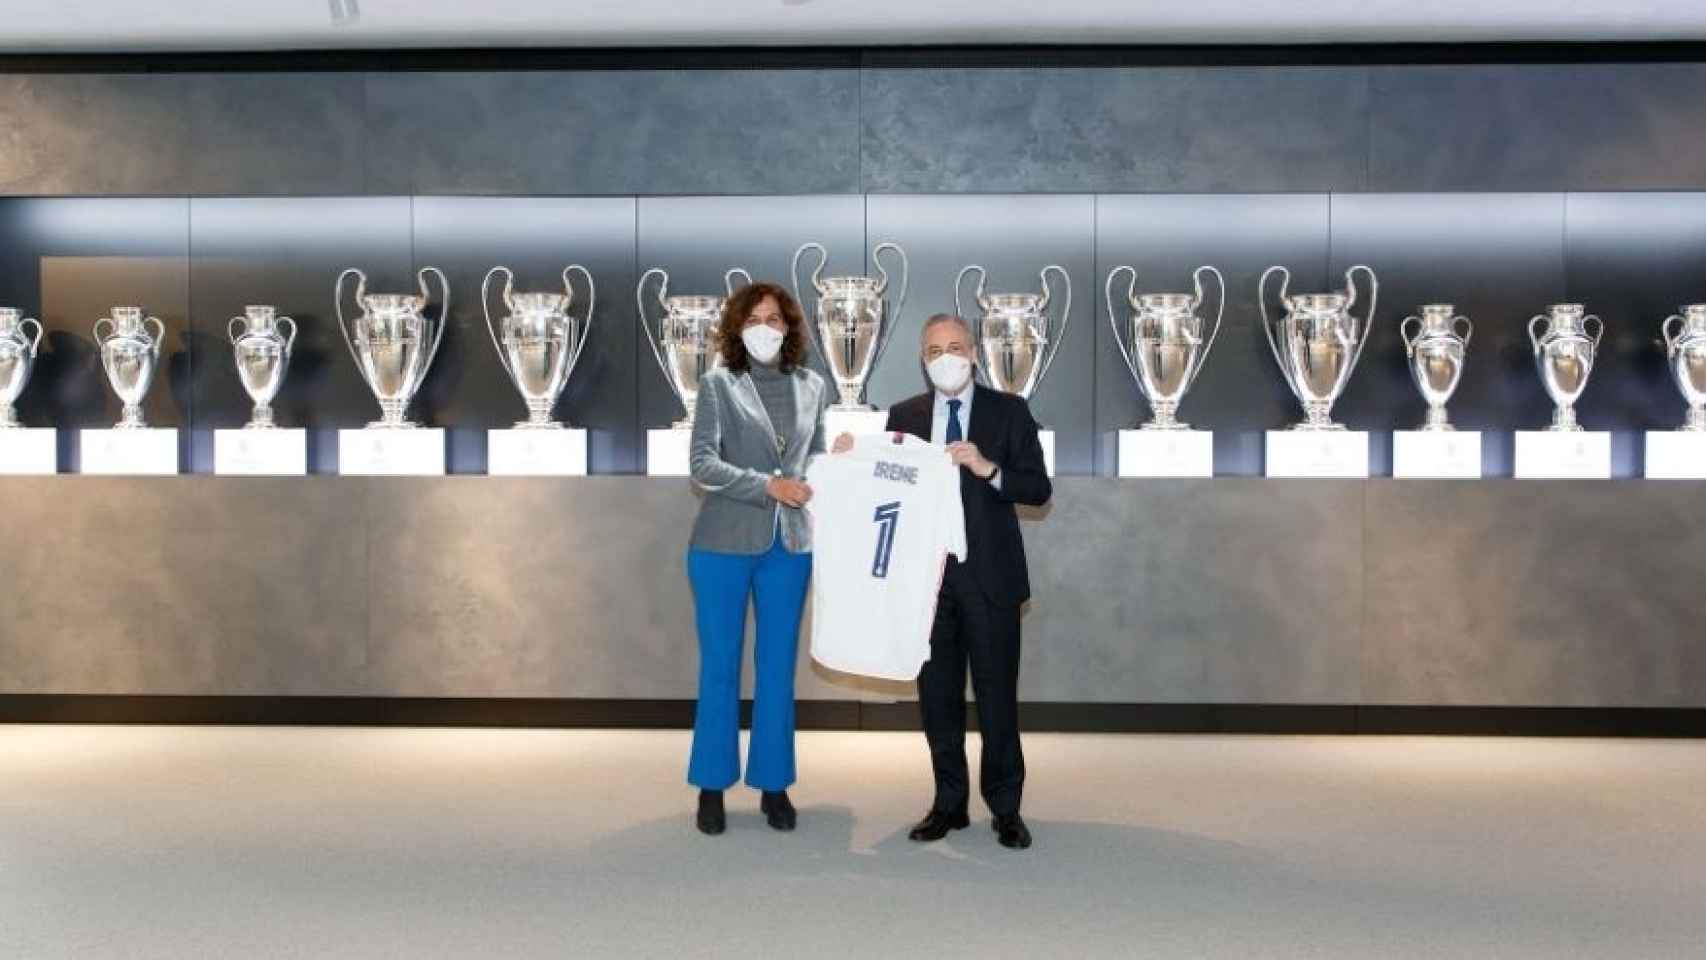 Irene Lozano y Florentino Pérez, en la sala de trofeos de la Champions League